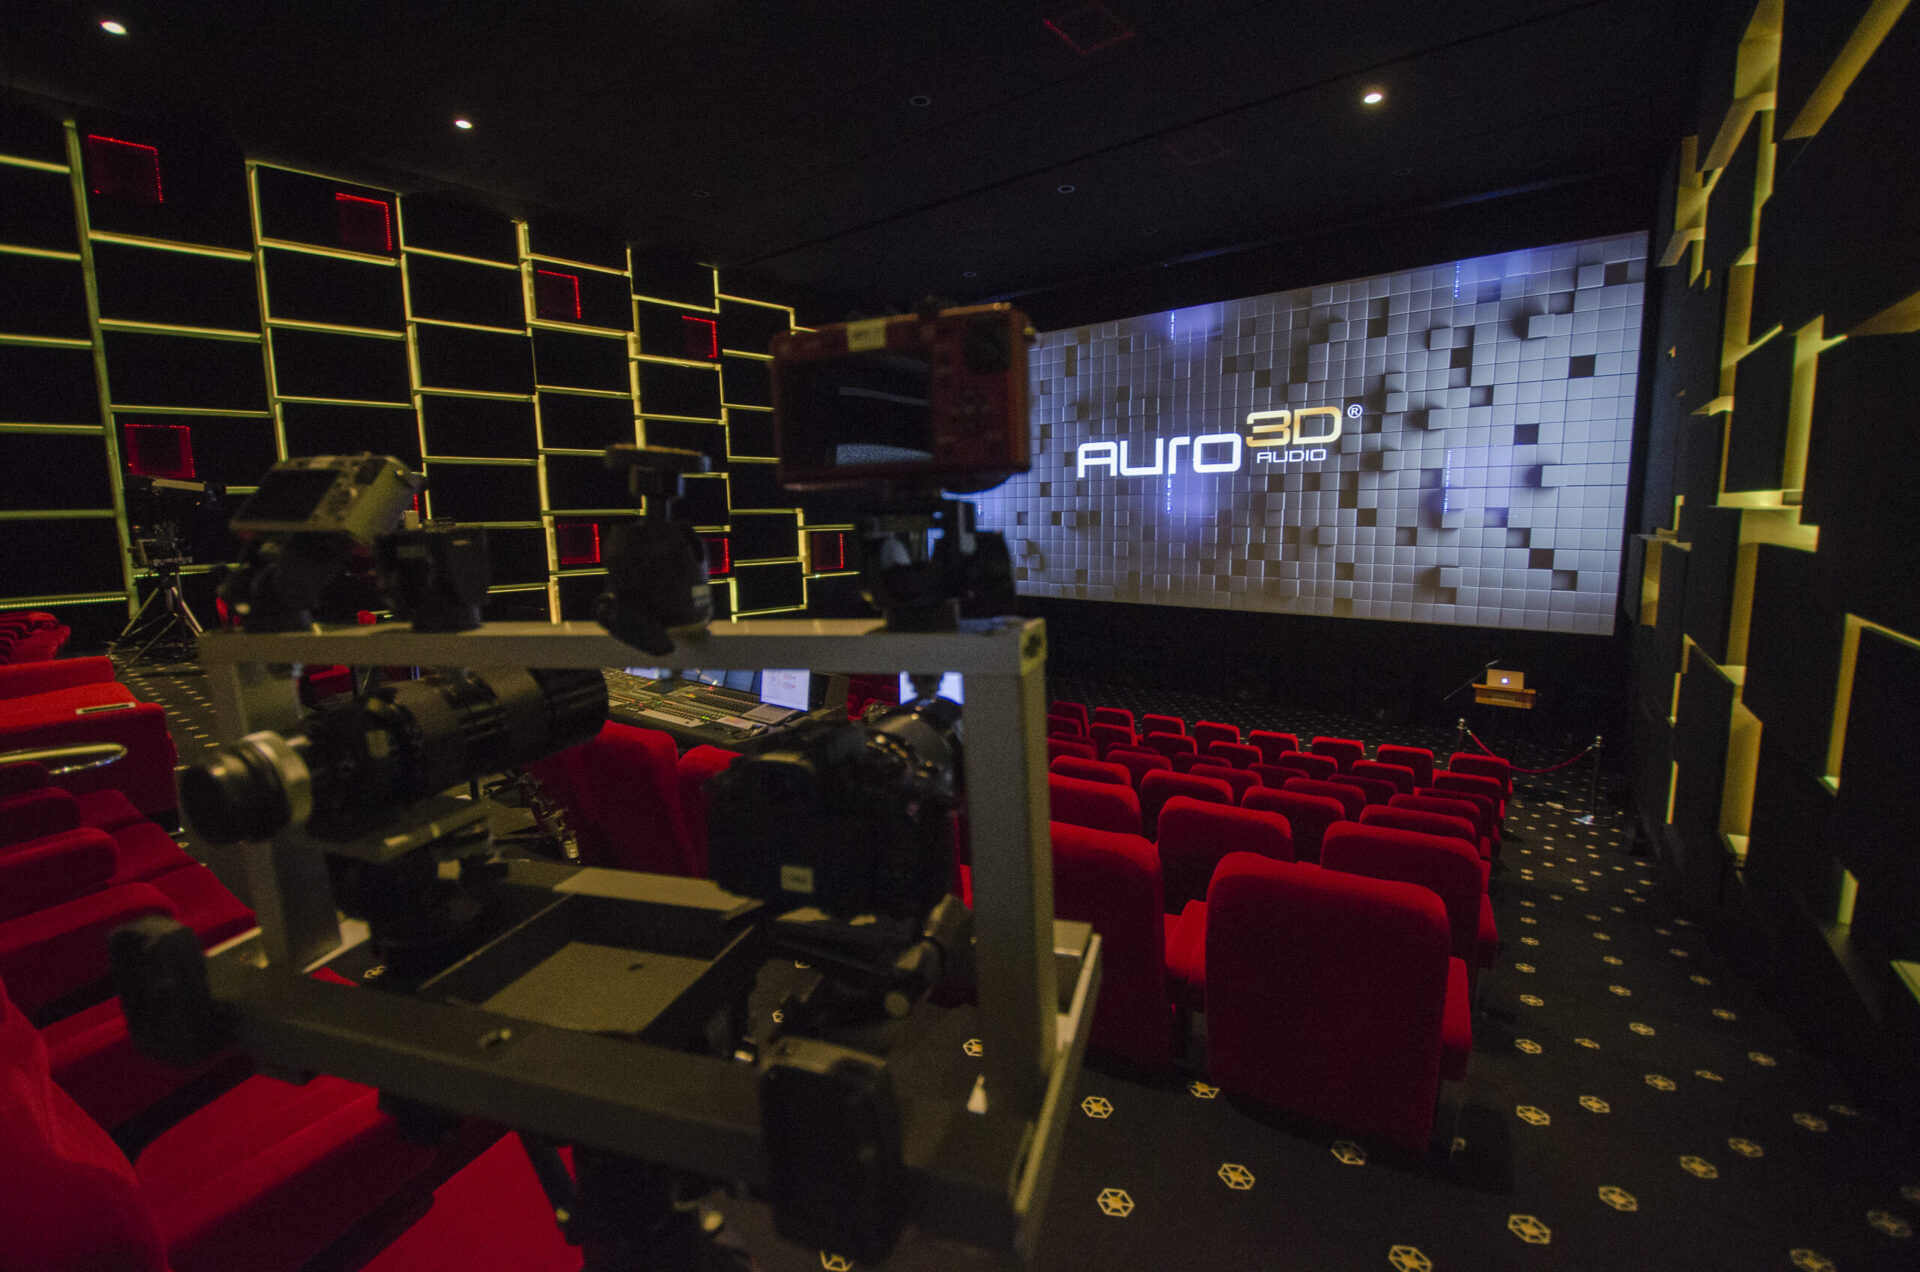 Muerto Judas Theaterproducties Galaxy Studios CD Opname Auro 3D Aurotorium scaled